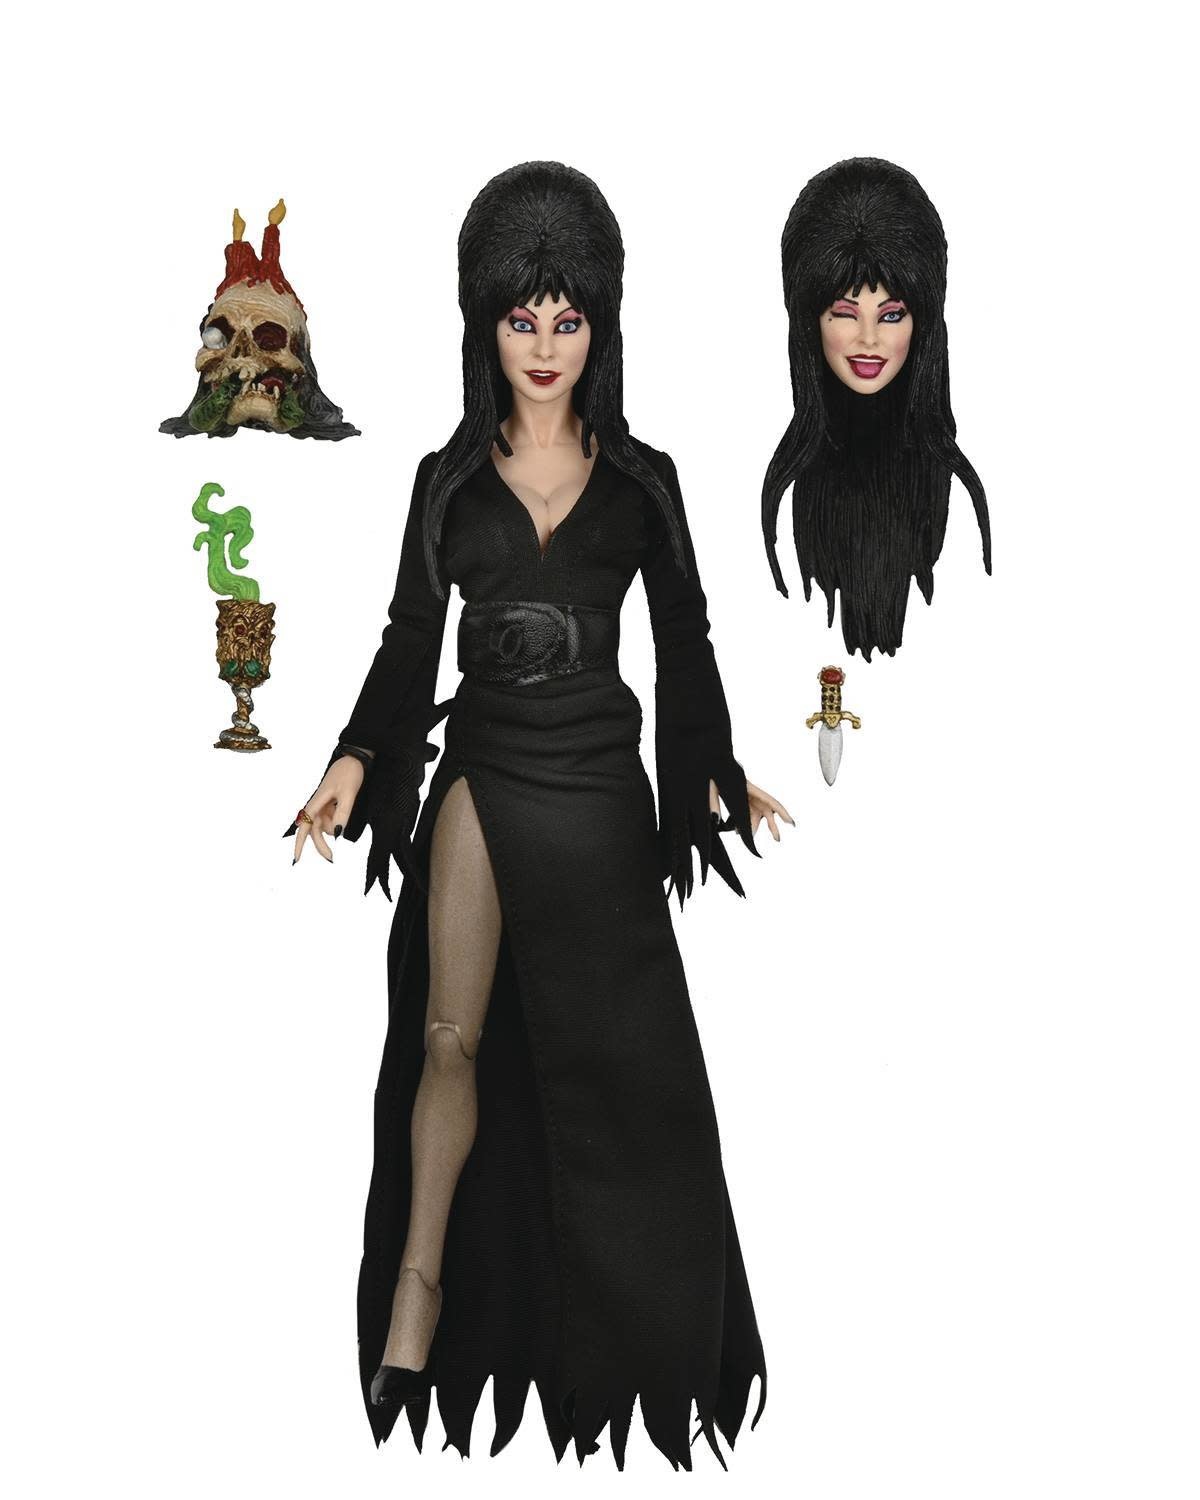 Elvira Elvira, Mistress of the Dark 8″ Clothed Action Figure